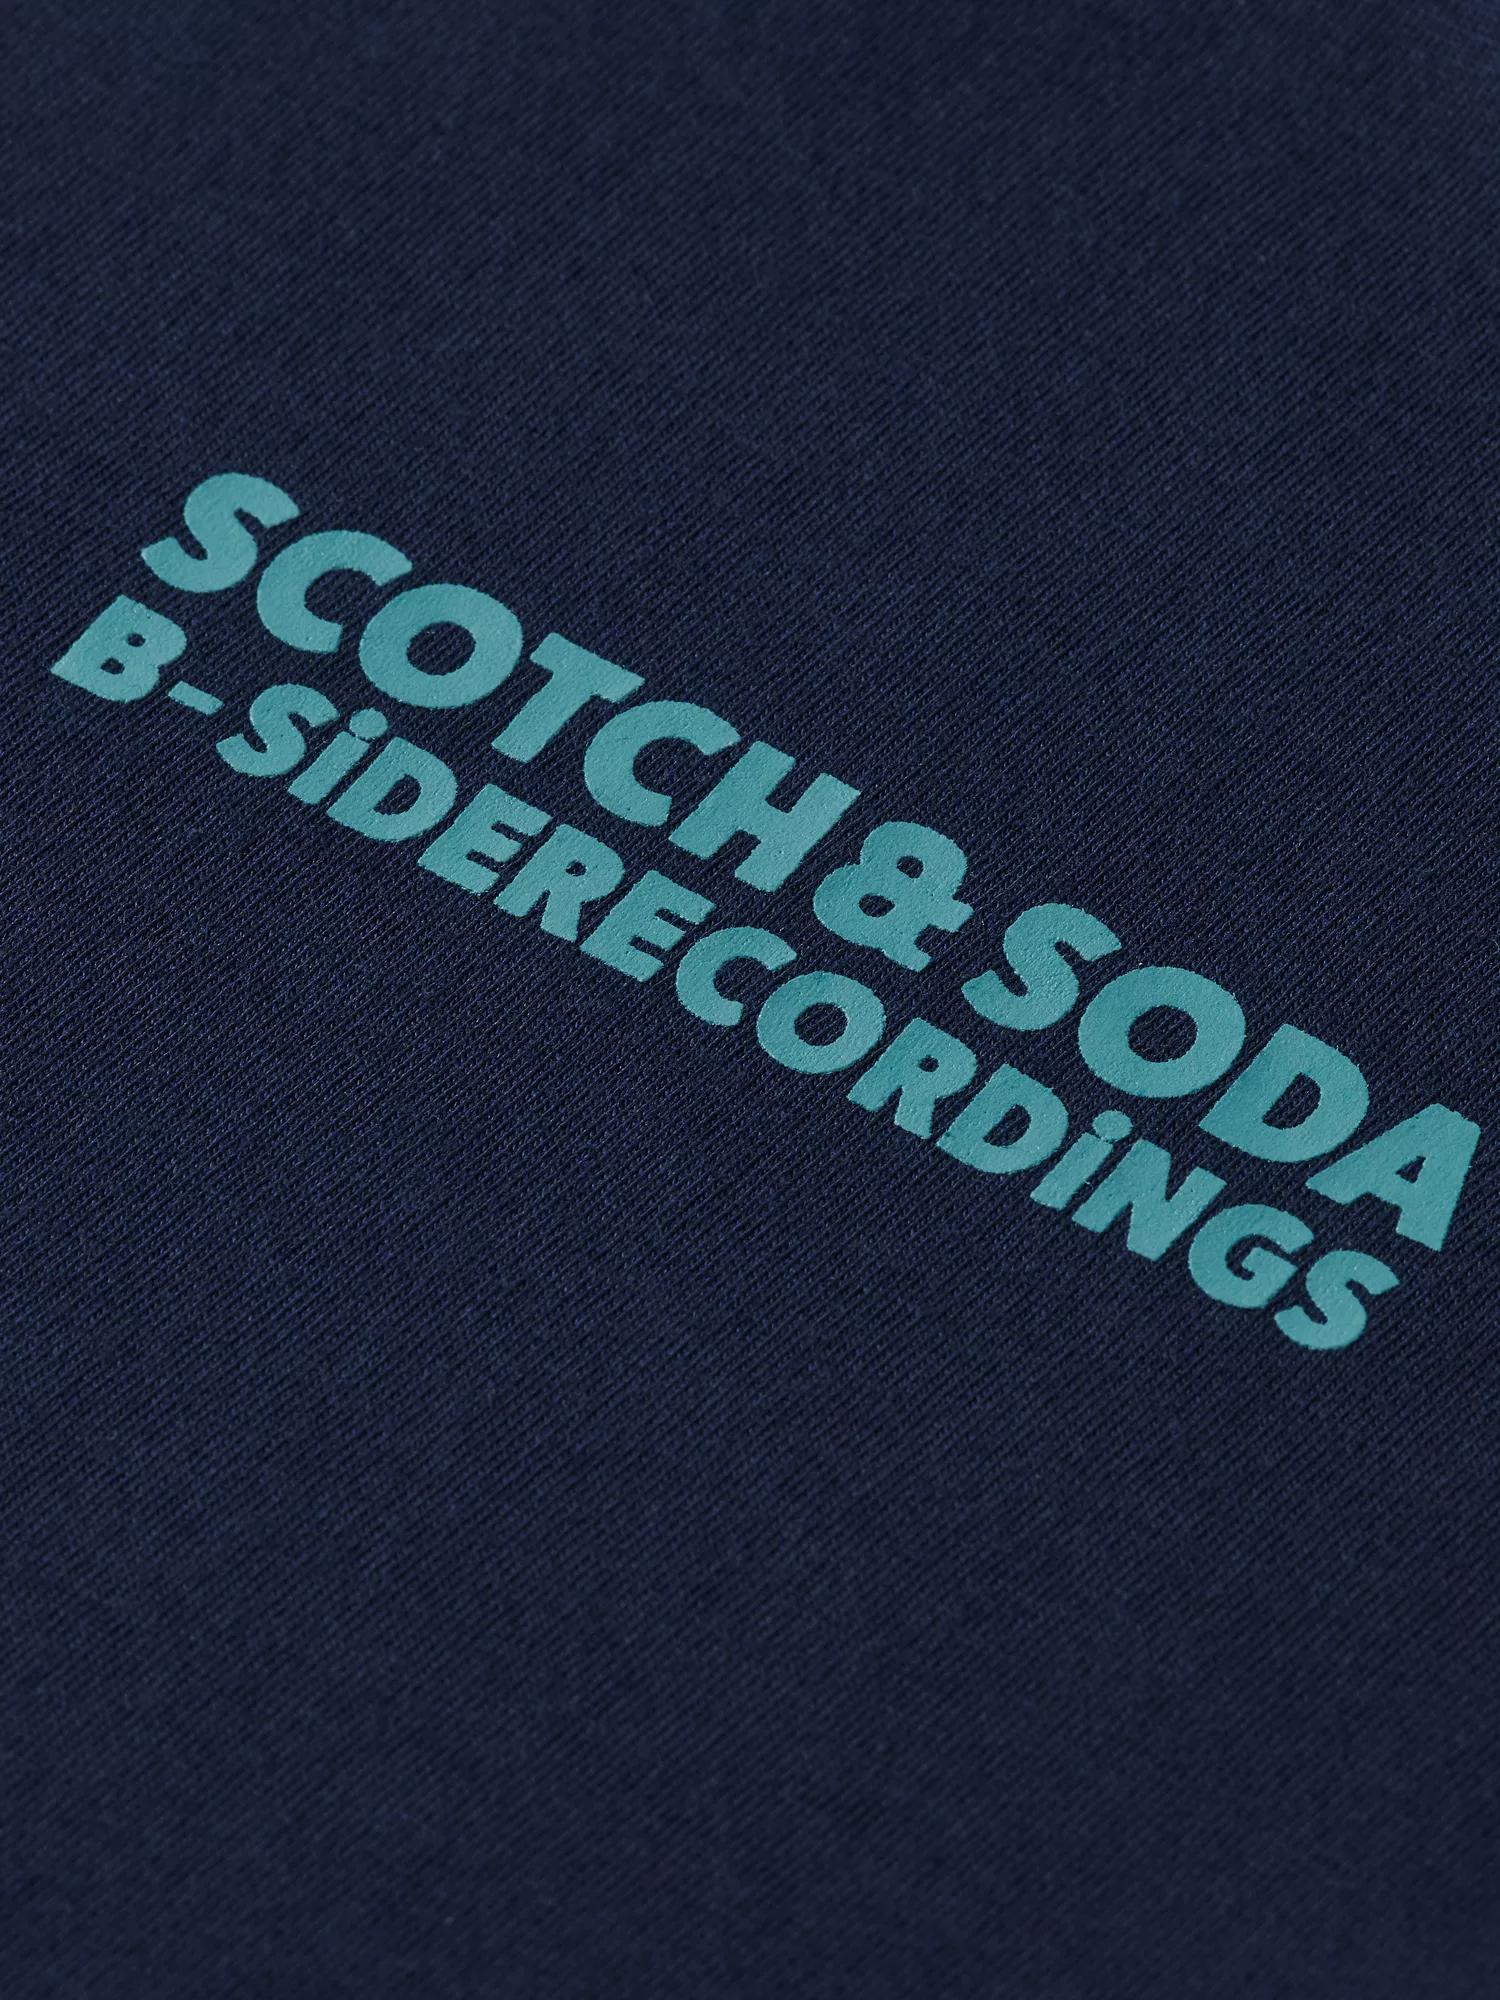 Scotch & Soda - Regular Fit Artwork Tee - Steel